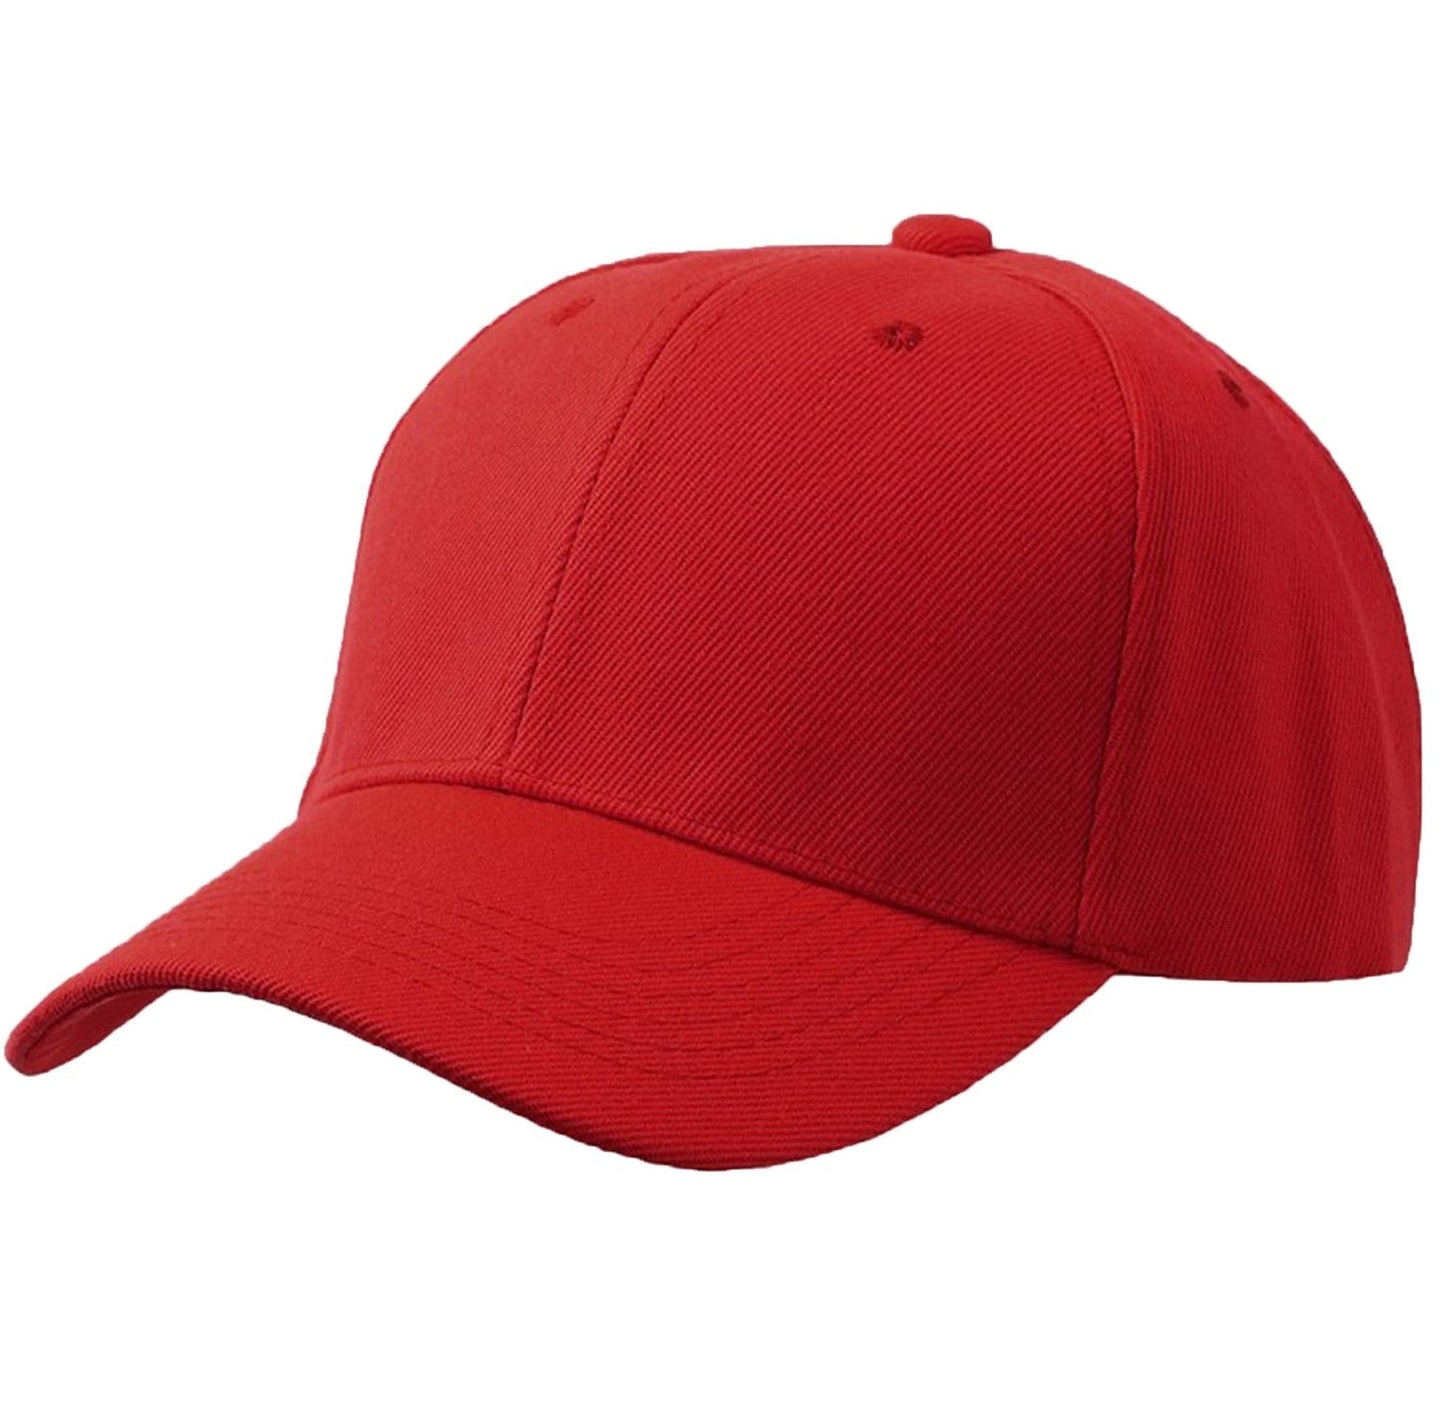 Red Plain Curved Baseball Cap